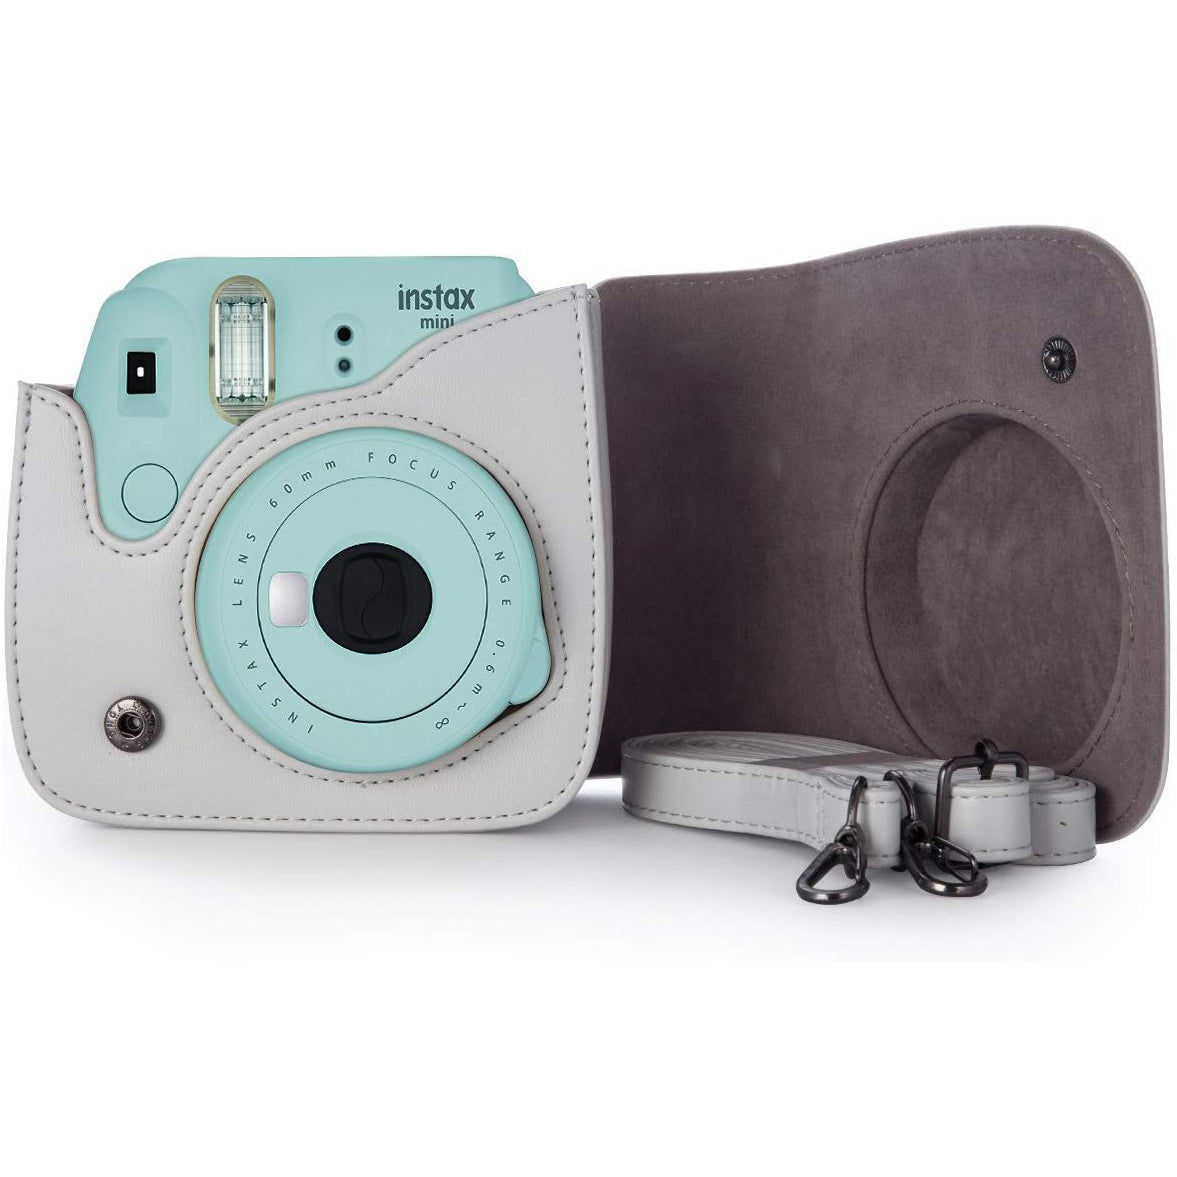 CAIUL Instax PU Leather Case Bag for Fujifilm Instax Mini 9 8 8+ Instant Camera Smokey White